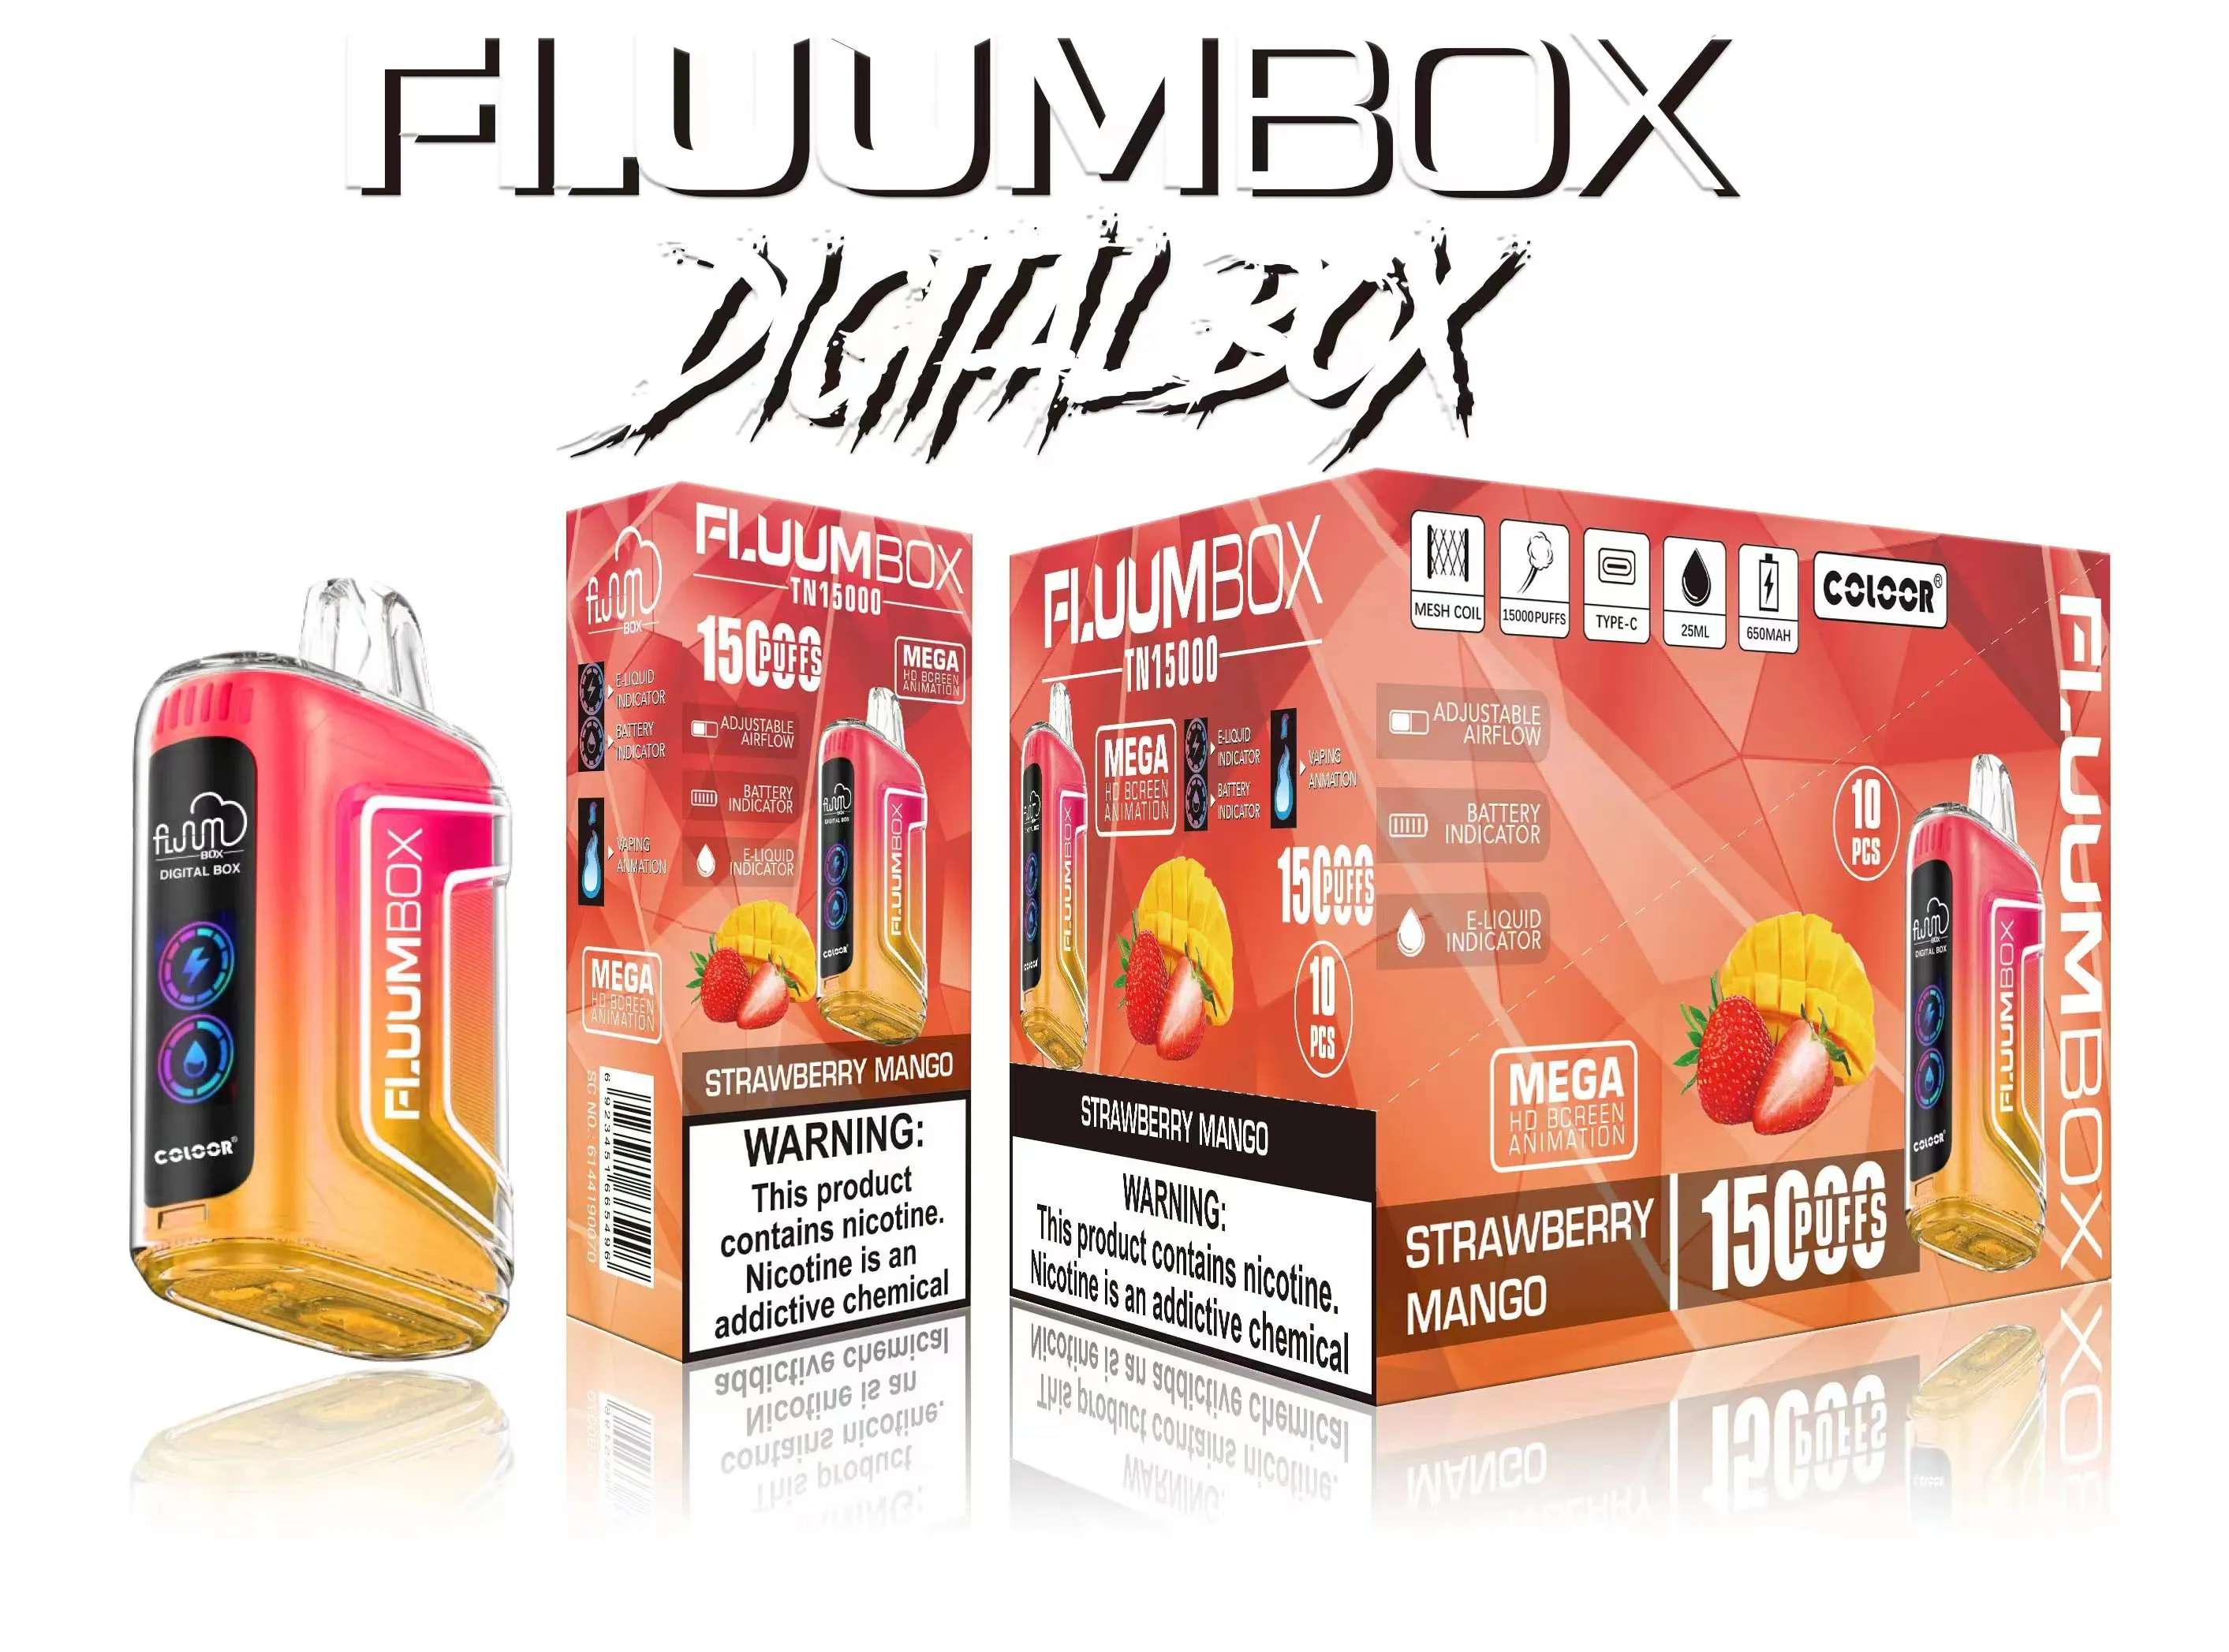 Fluum Box 15000 puff 15k puff Digital box 15000 Disposable E Cigarettes Vape Pen 25ml Pre-Filled Mesh Coil Pods Cartridge 650Mah Rechargeable Battery